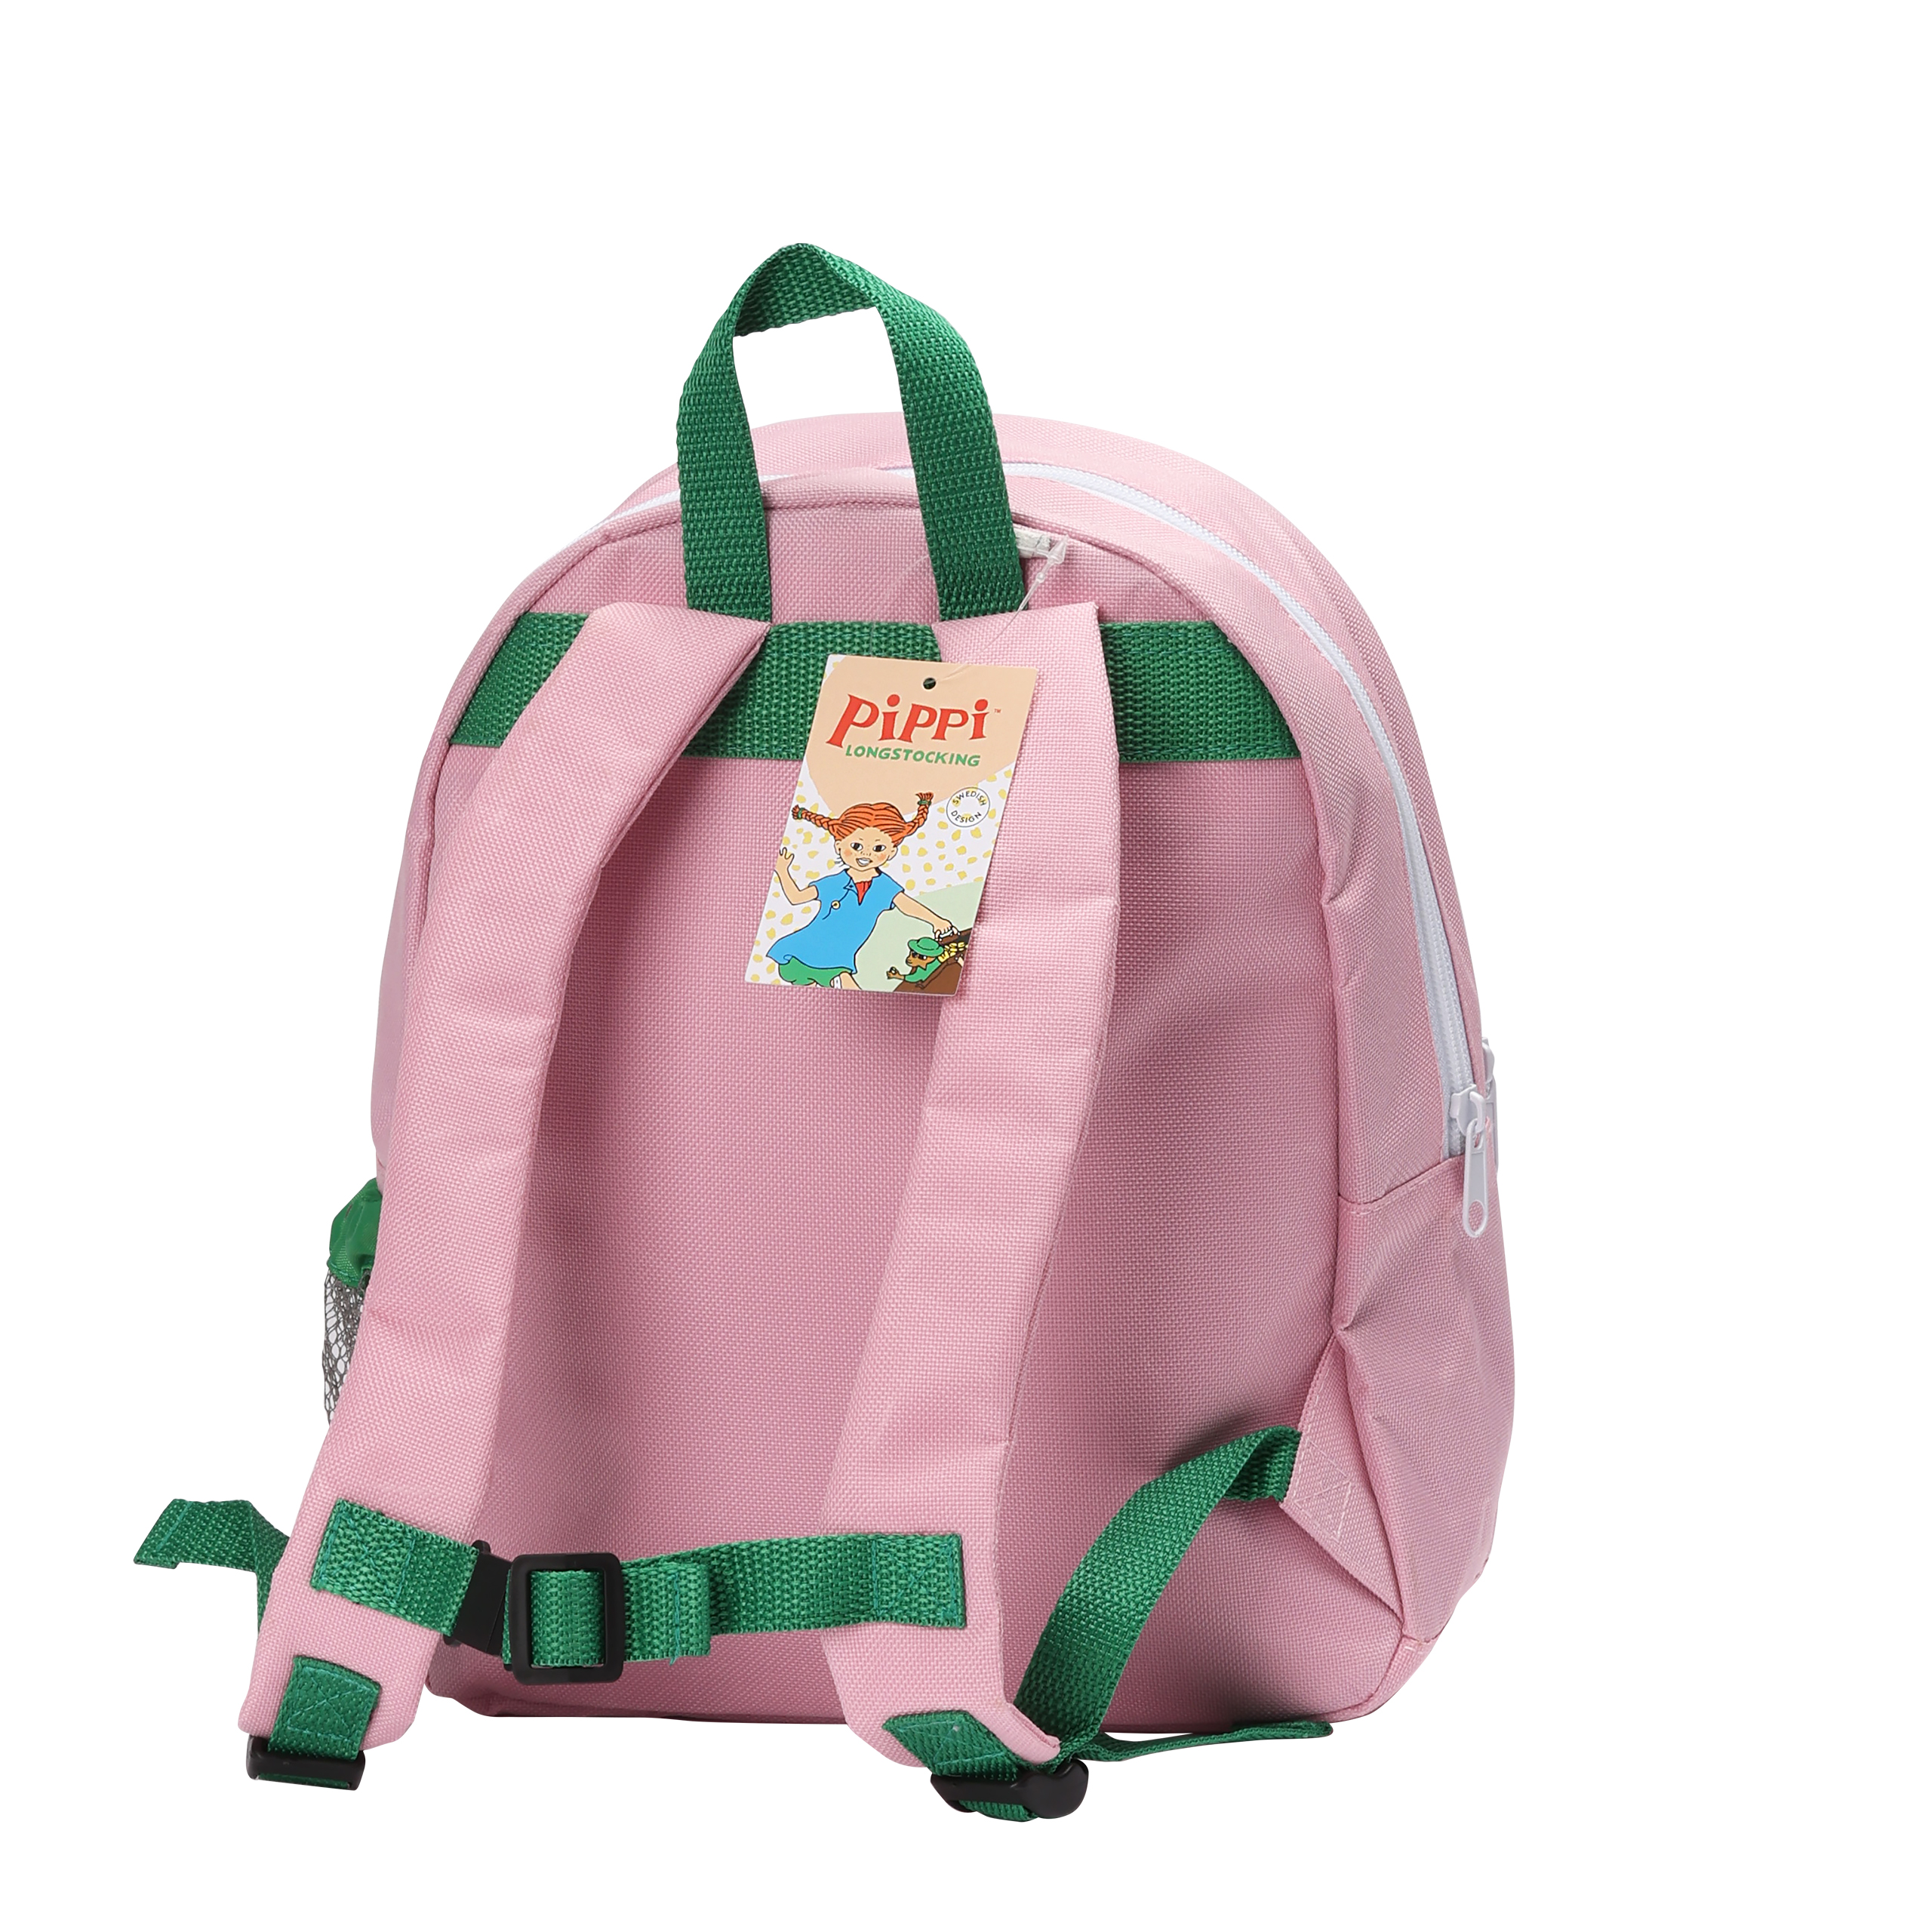 Pippi Longstocking pippi kids bag backpack pink